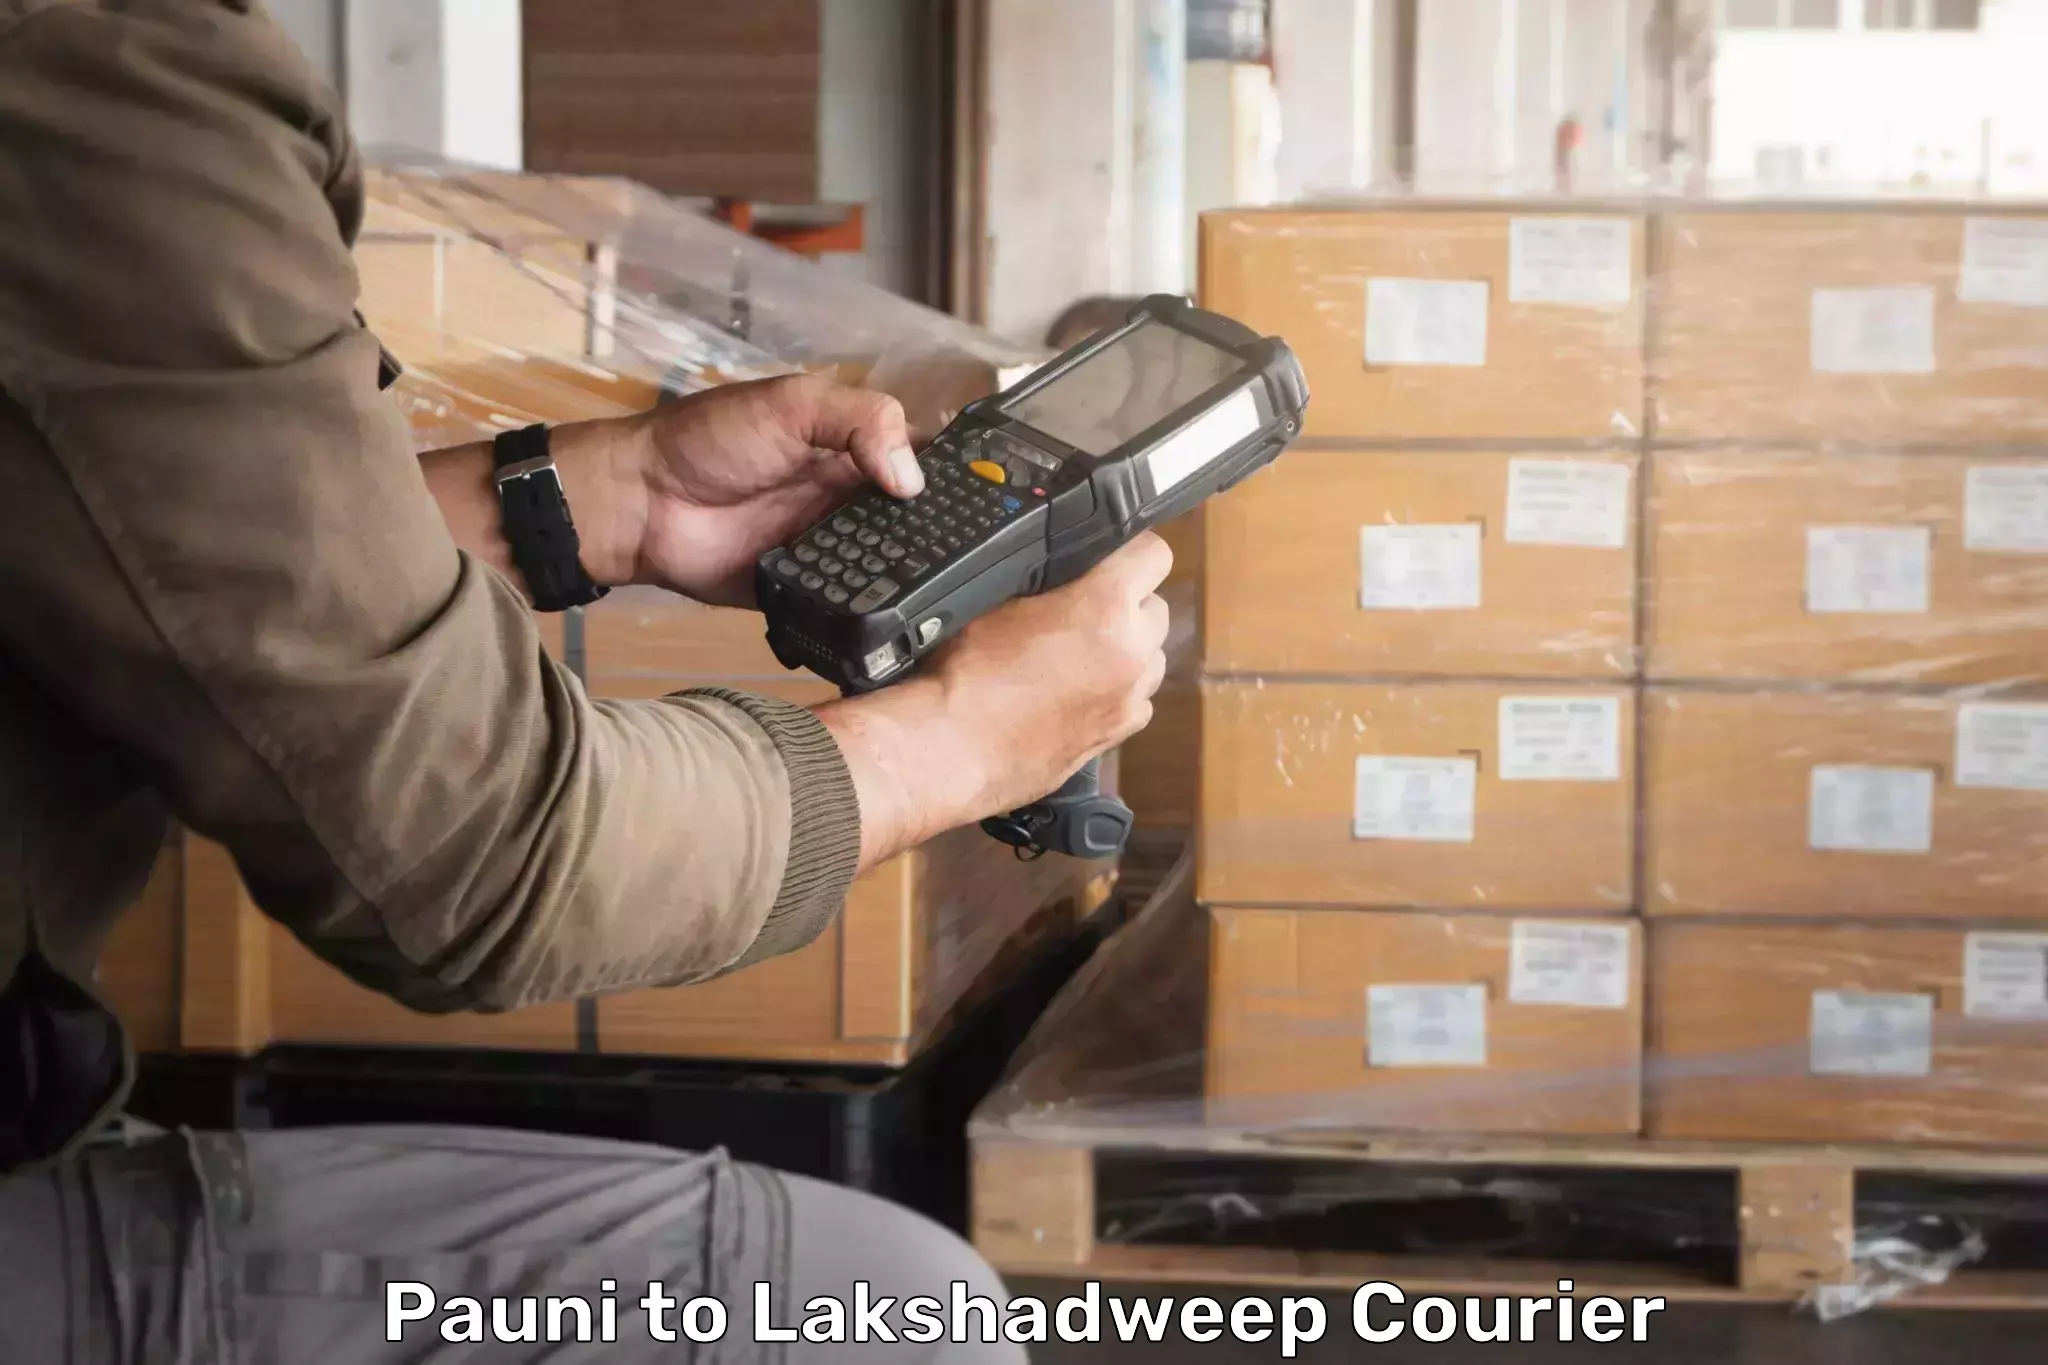 Customer-focused courier Pauni to Lakshadweep